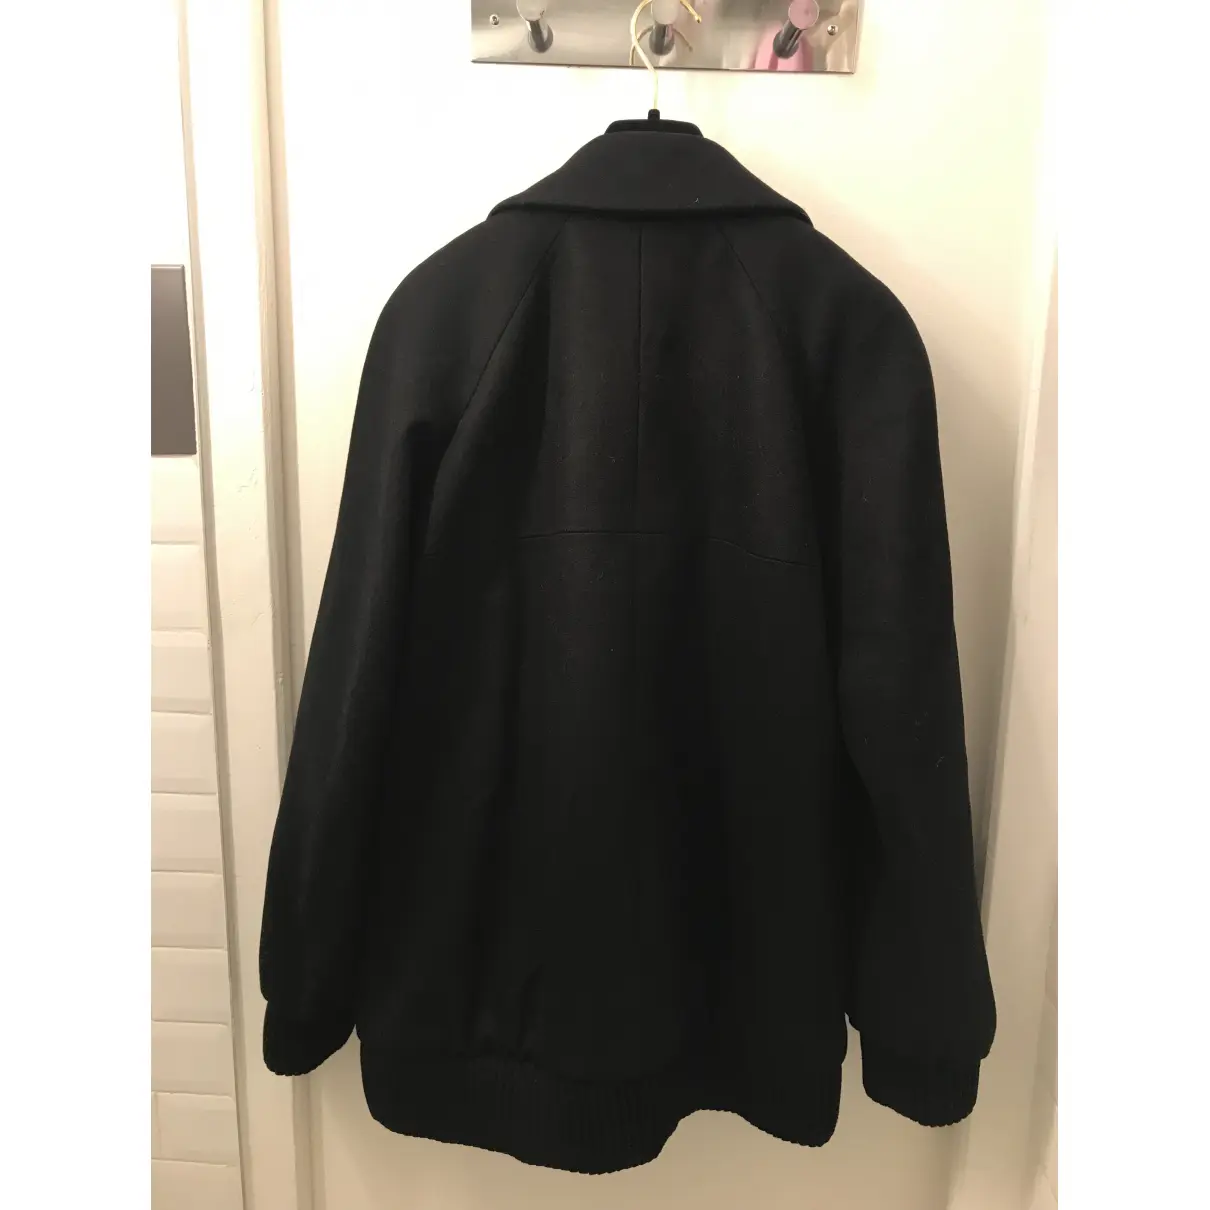 Buy Chanel Cashmere coat online